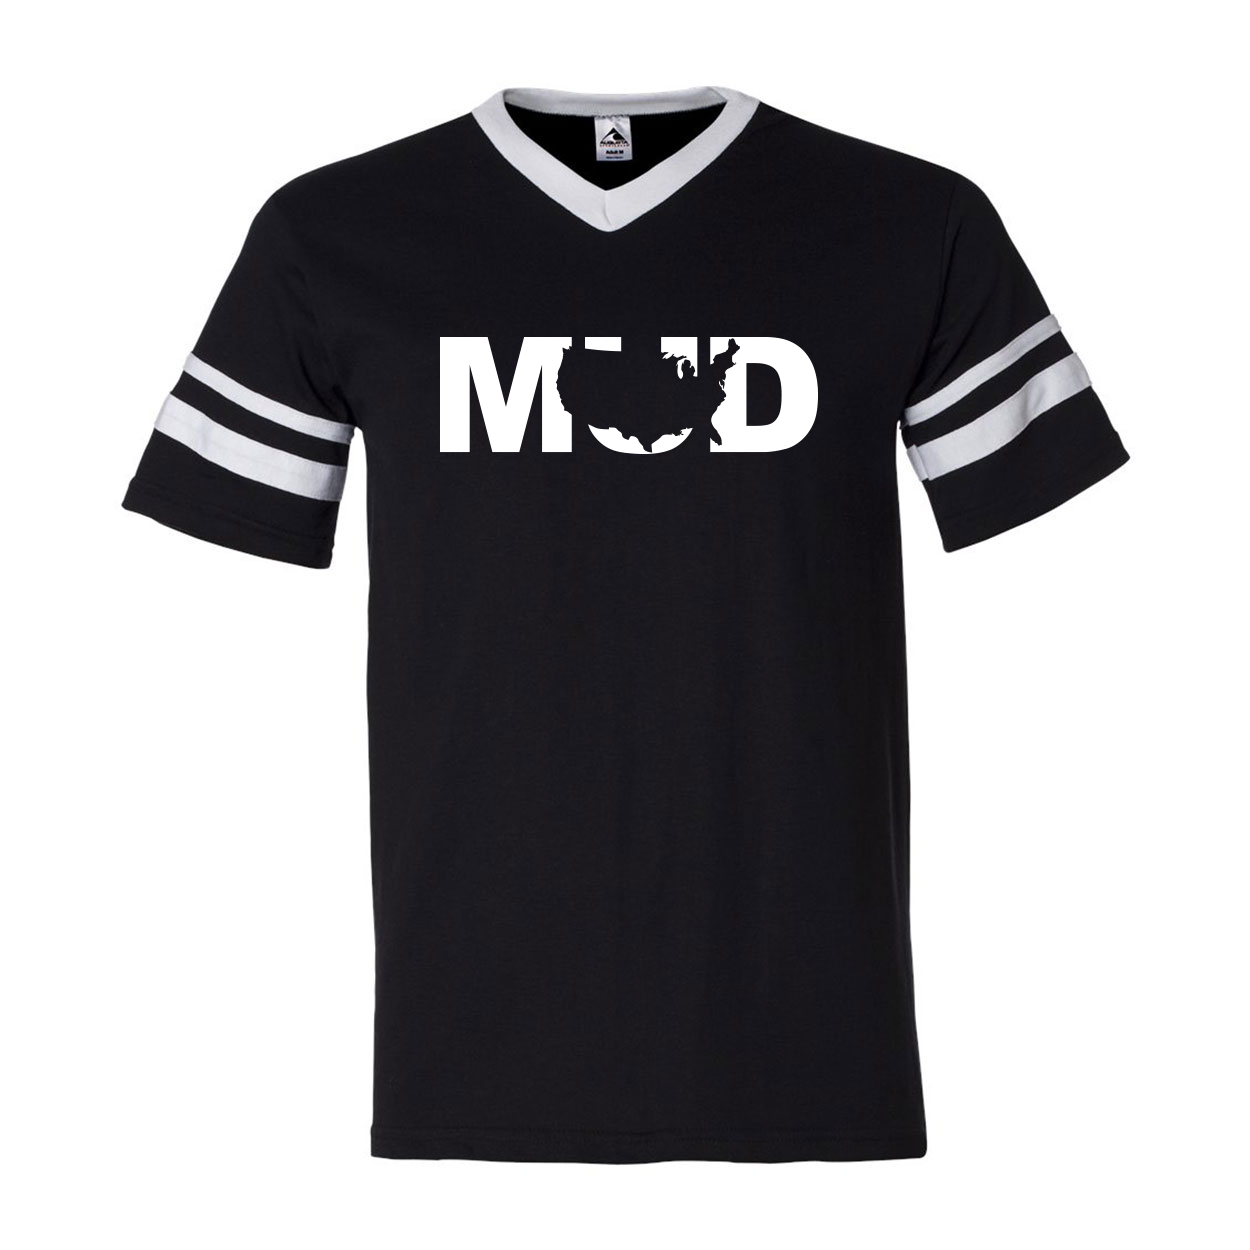 Mud United States Classic Premium Striped Jersey T-Shirt Black/White (White Logo)